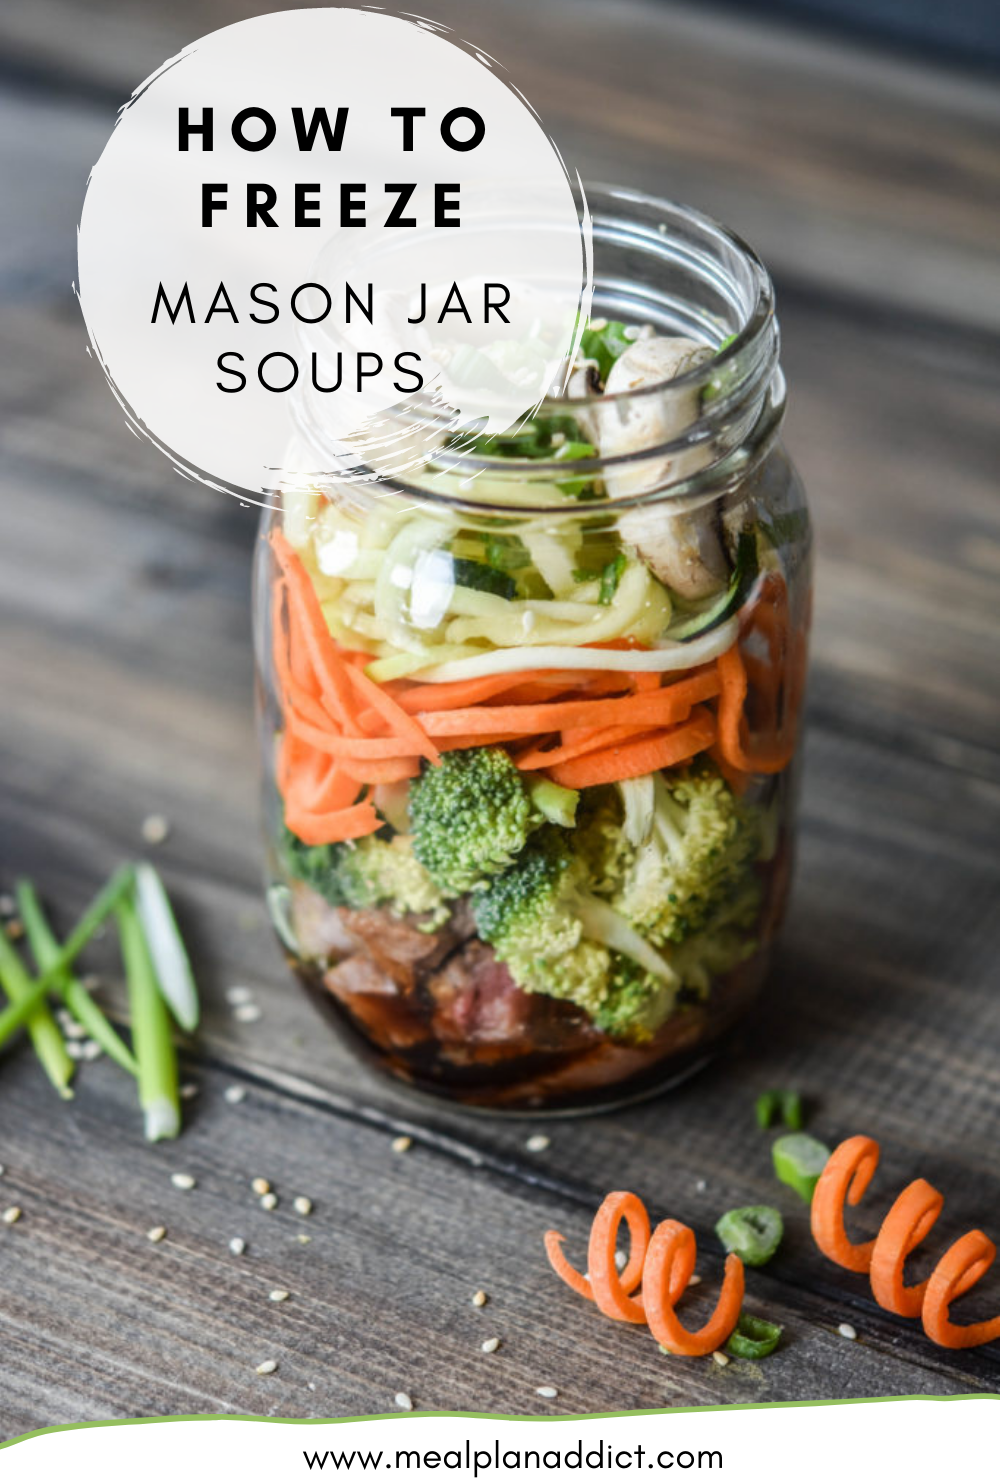 How to Freeze Mason Jar Soups